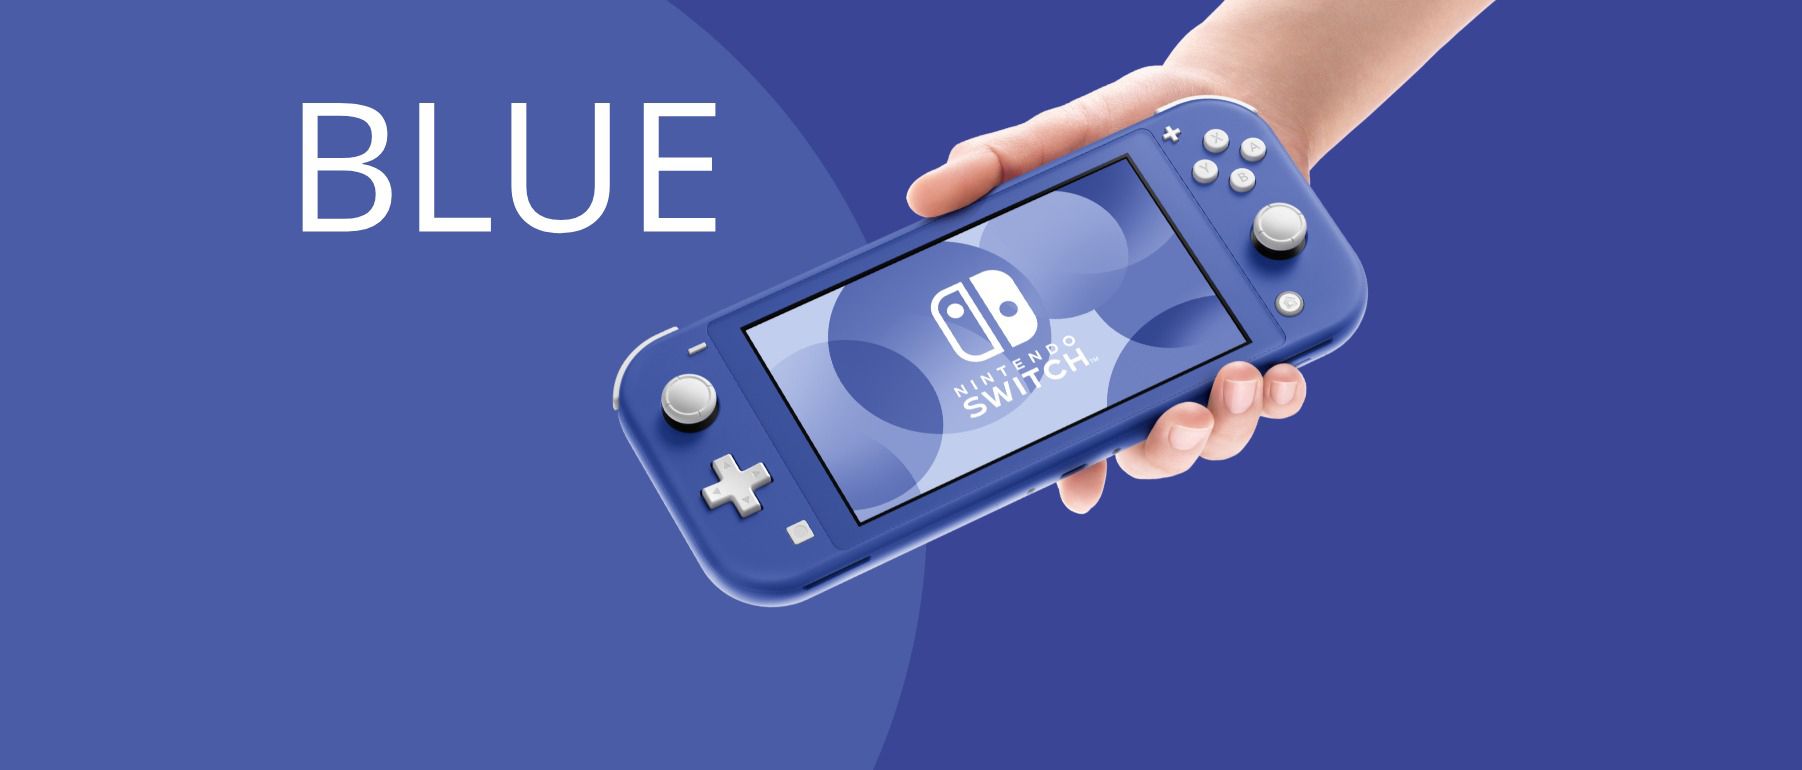 Blå Nintendo Switch Lite lanceres i Europa den 7. maj!